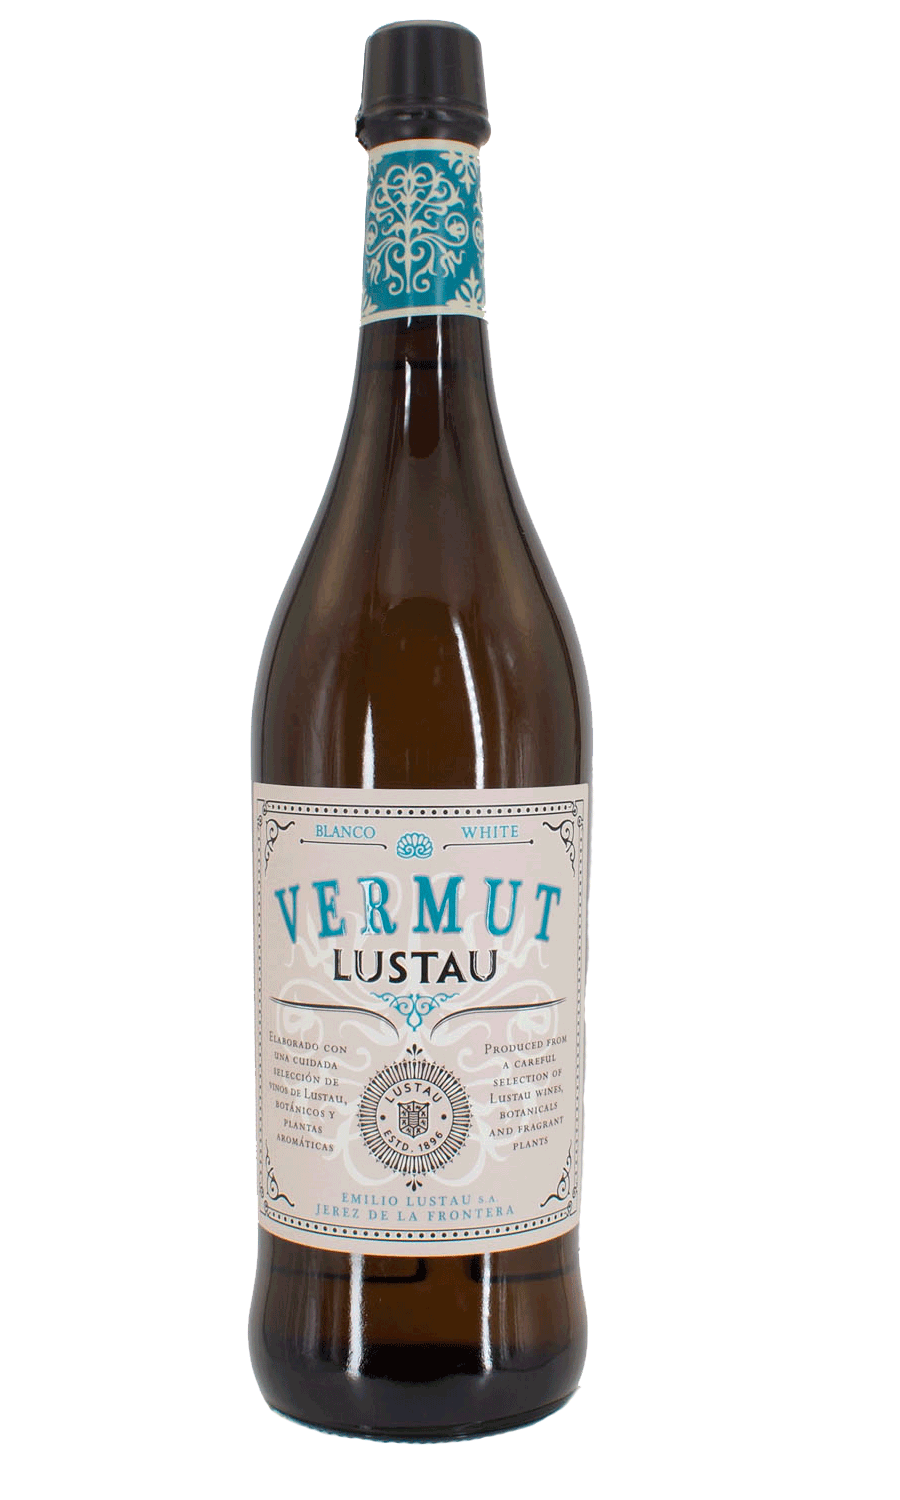 Lustau Vermut white